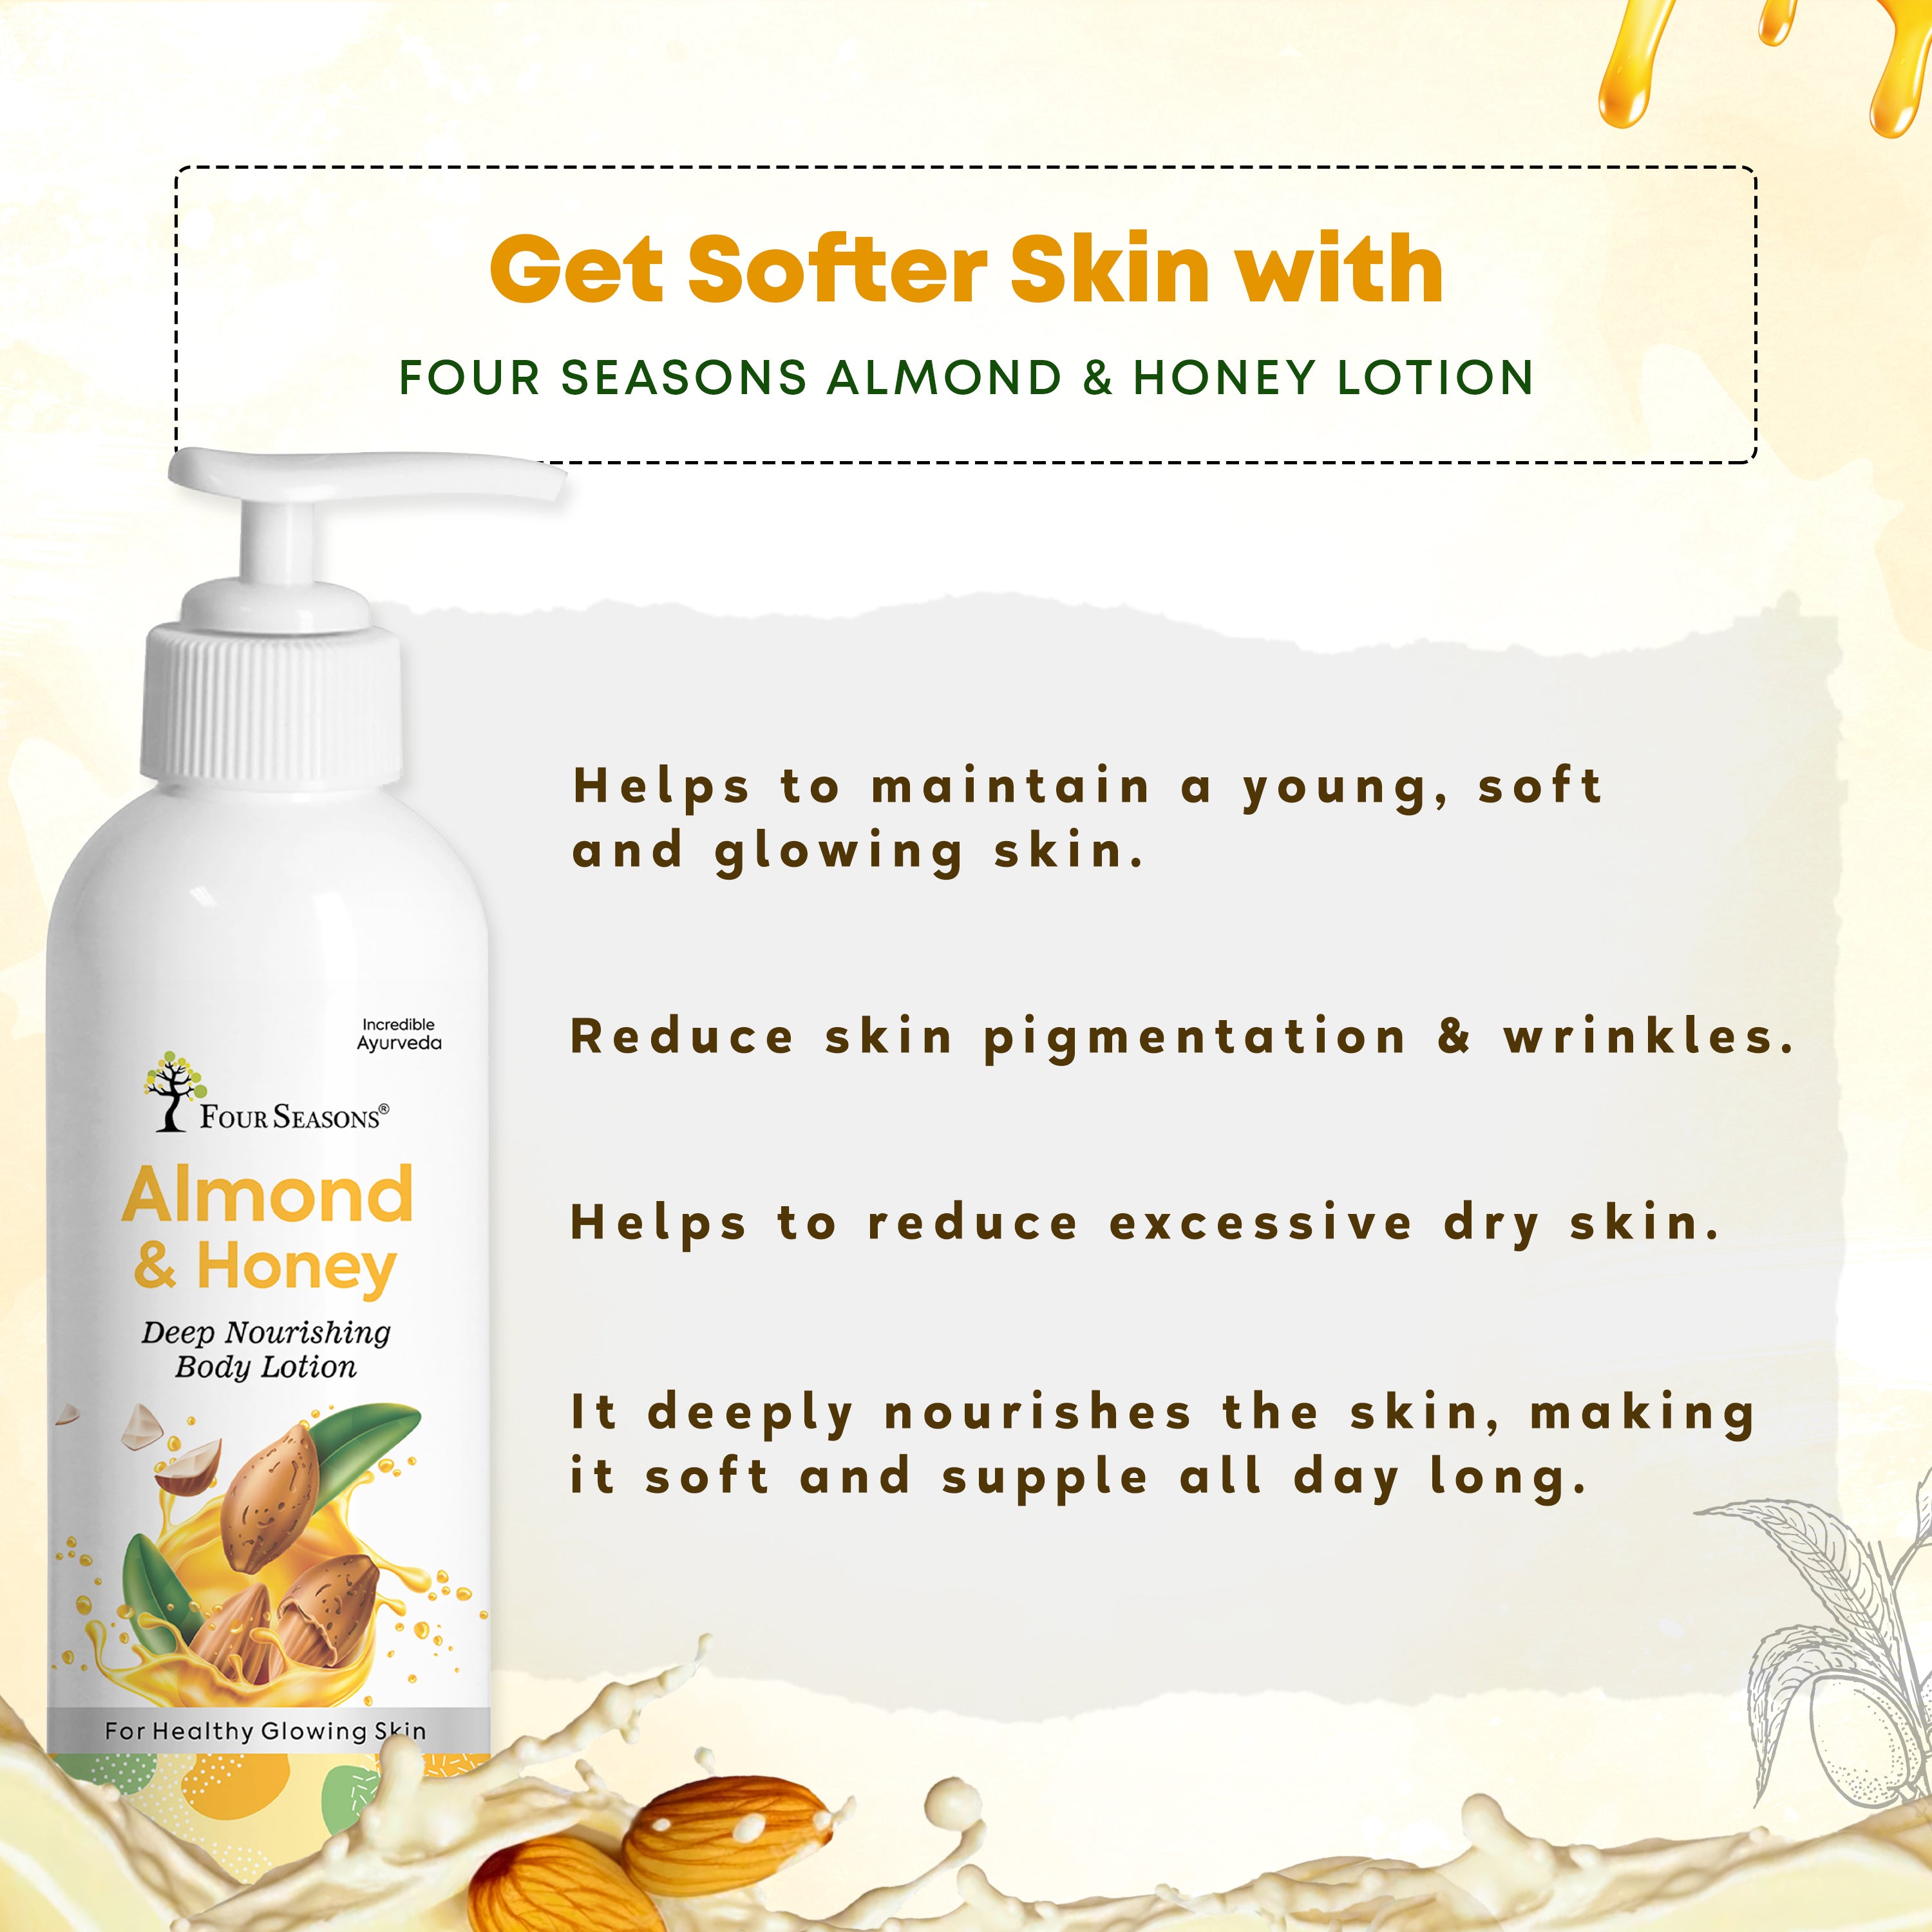 Almond & Honey Deep Nourishing Body Lotion